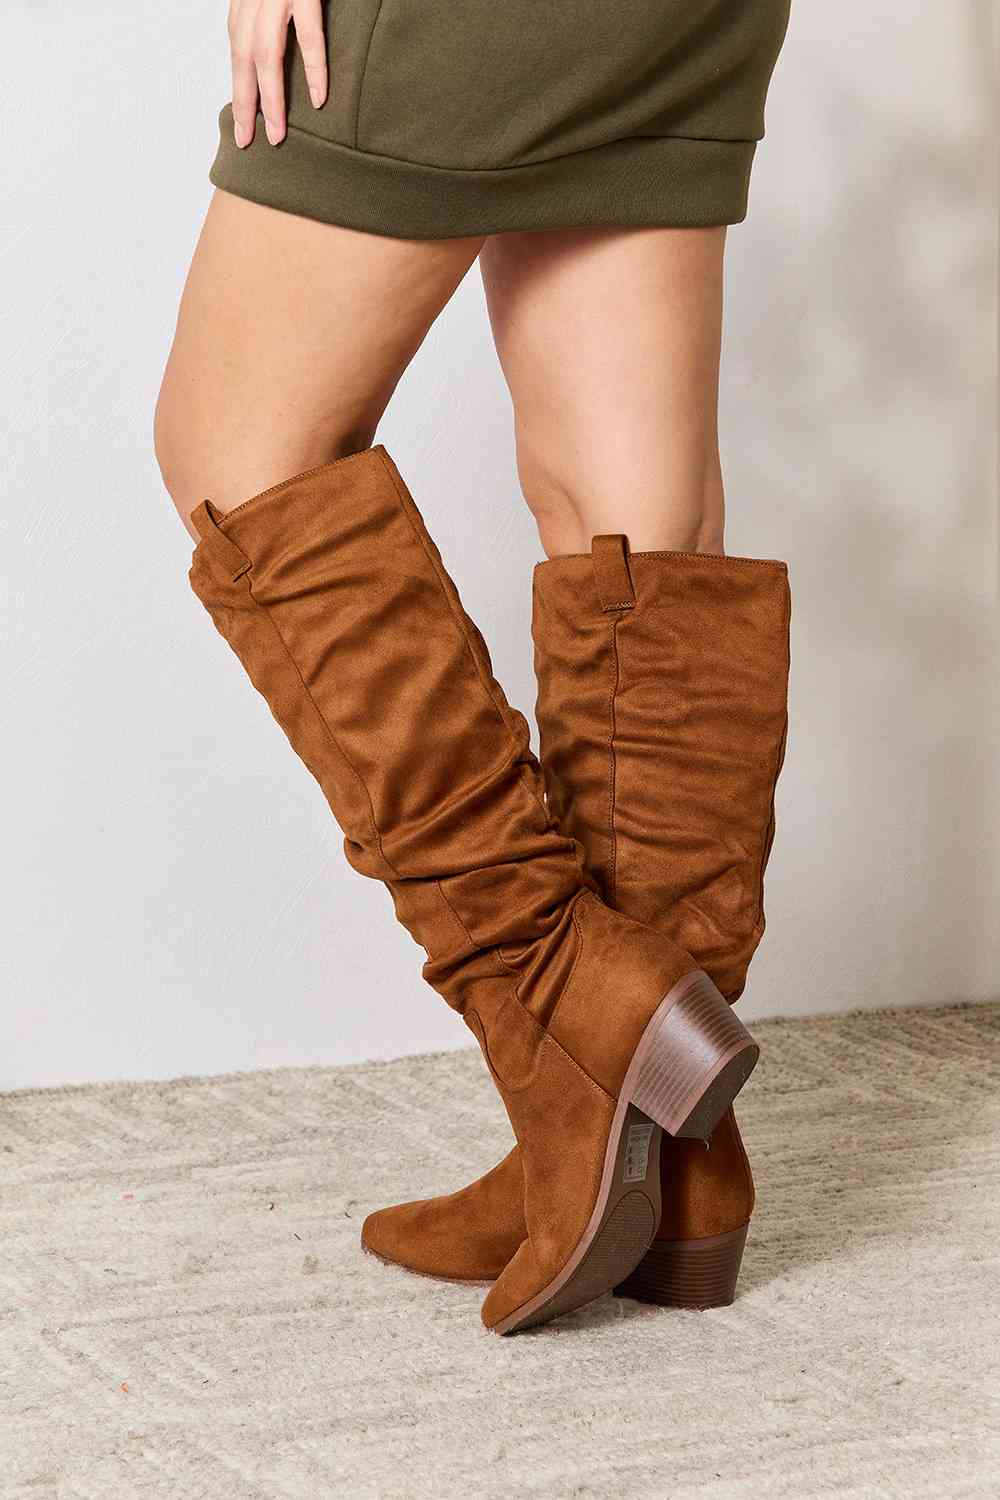 Elegant knee-high heel boots, Stylish women's high-heeled boots, Trendy knee-high boots with heels, Fashionable heeled knee boots, Women's tall boots with heels, Modern high heel knee-length boots